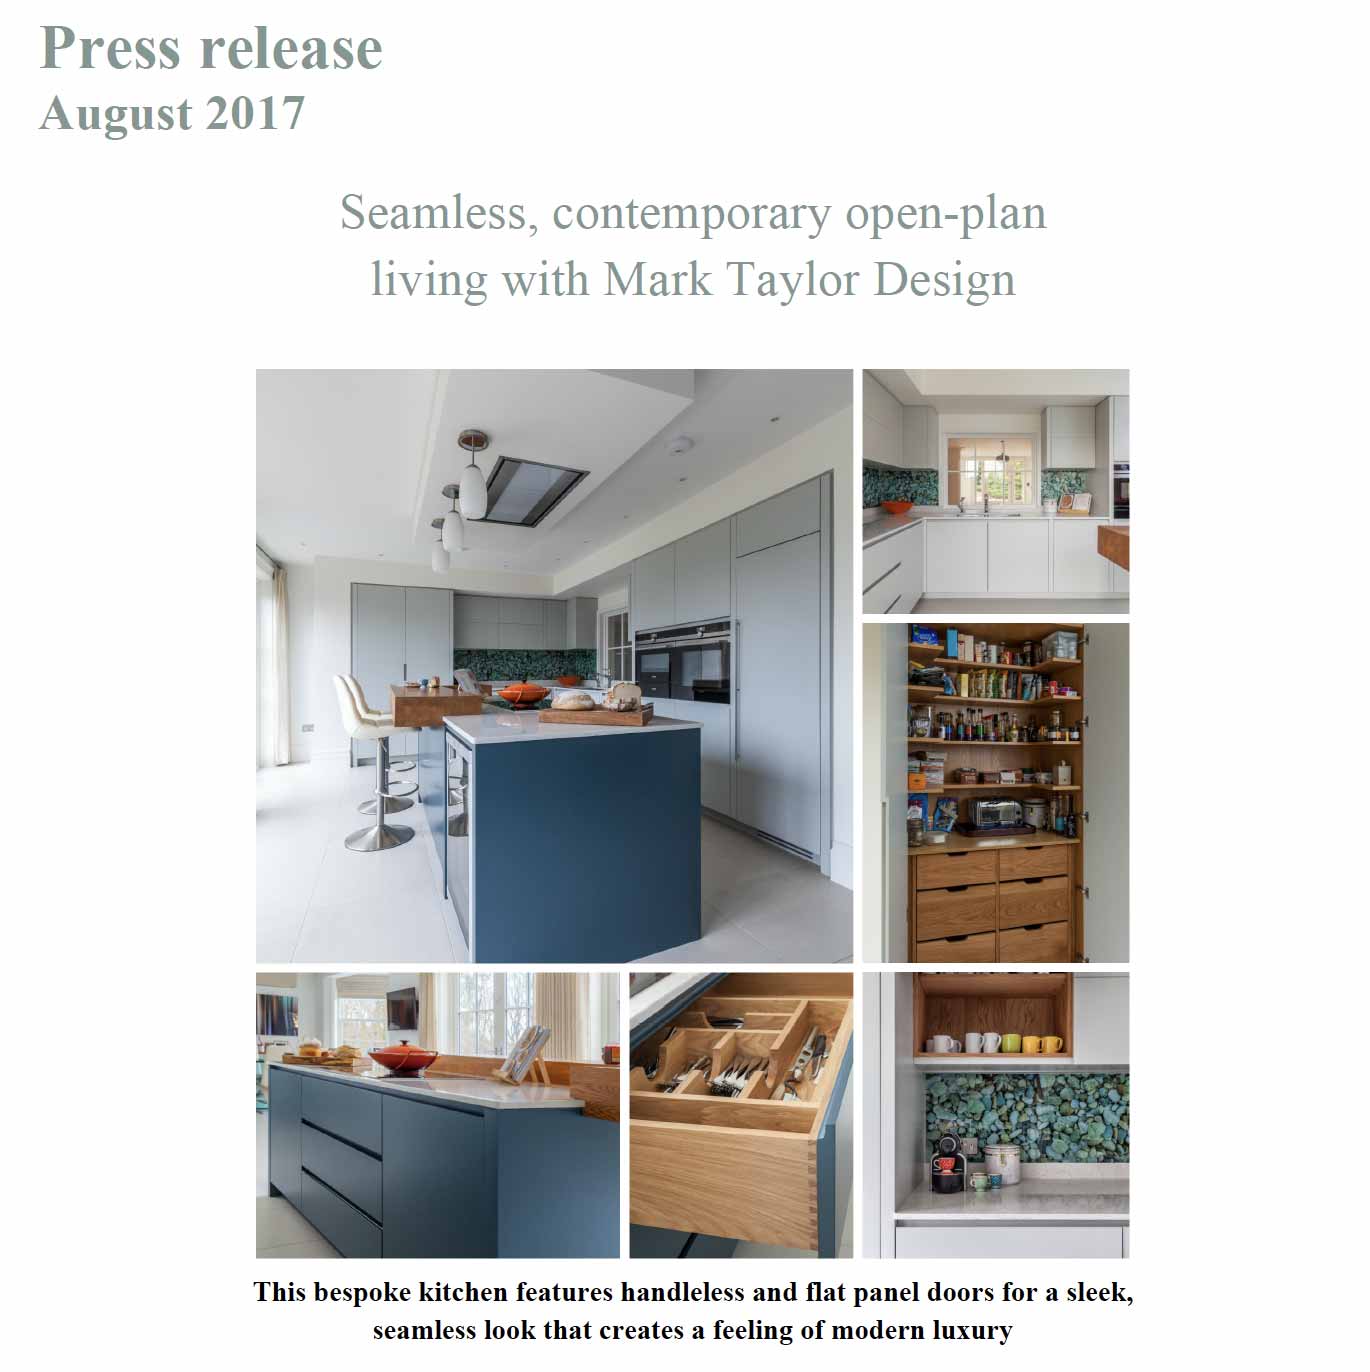 Mark Taylor Design open-plan, Georgian kitchen